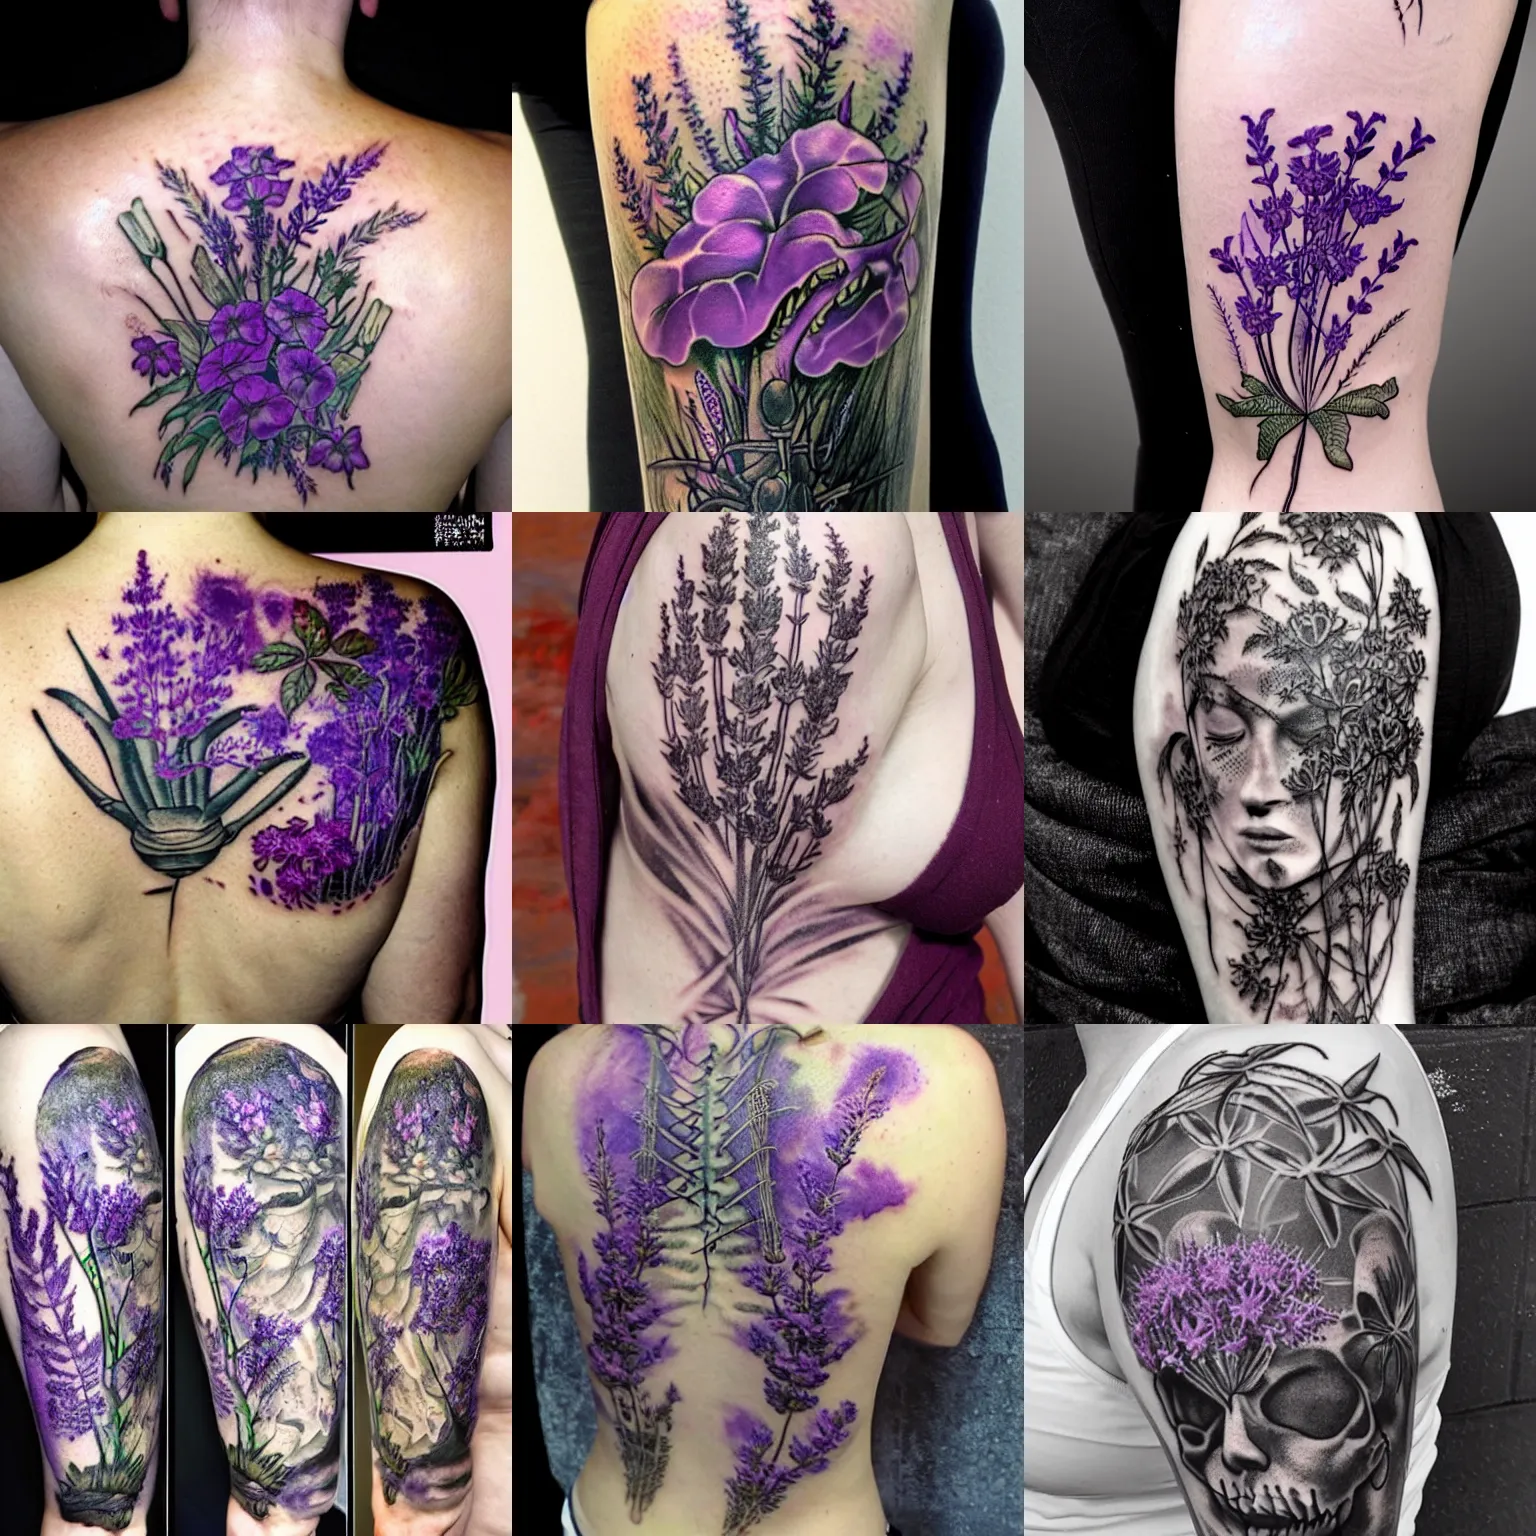 Prompt: botanical tattoo designed byh. r. giger, verbena and lavender flowers, inking on skin